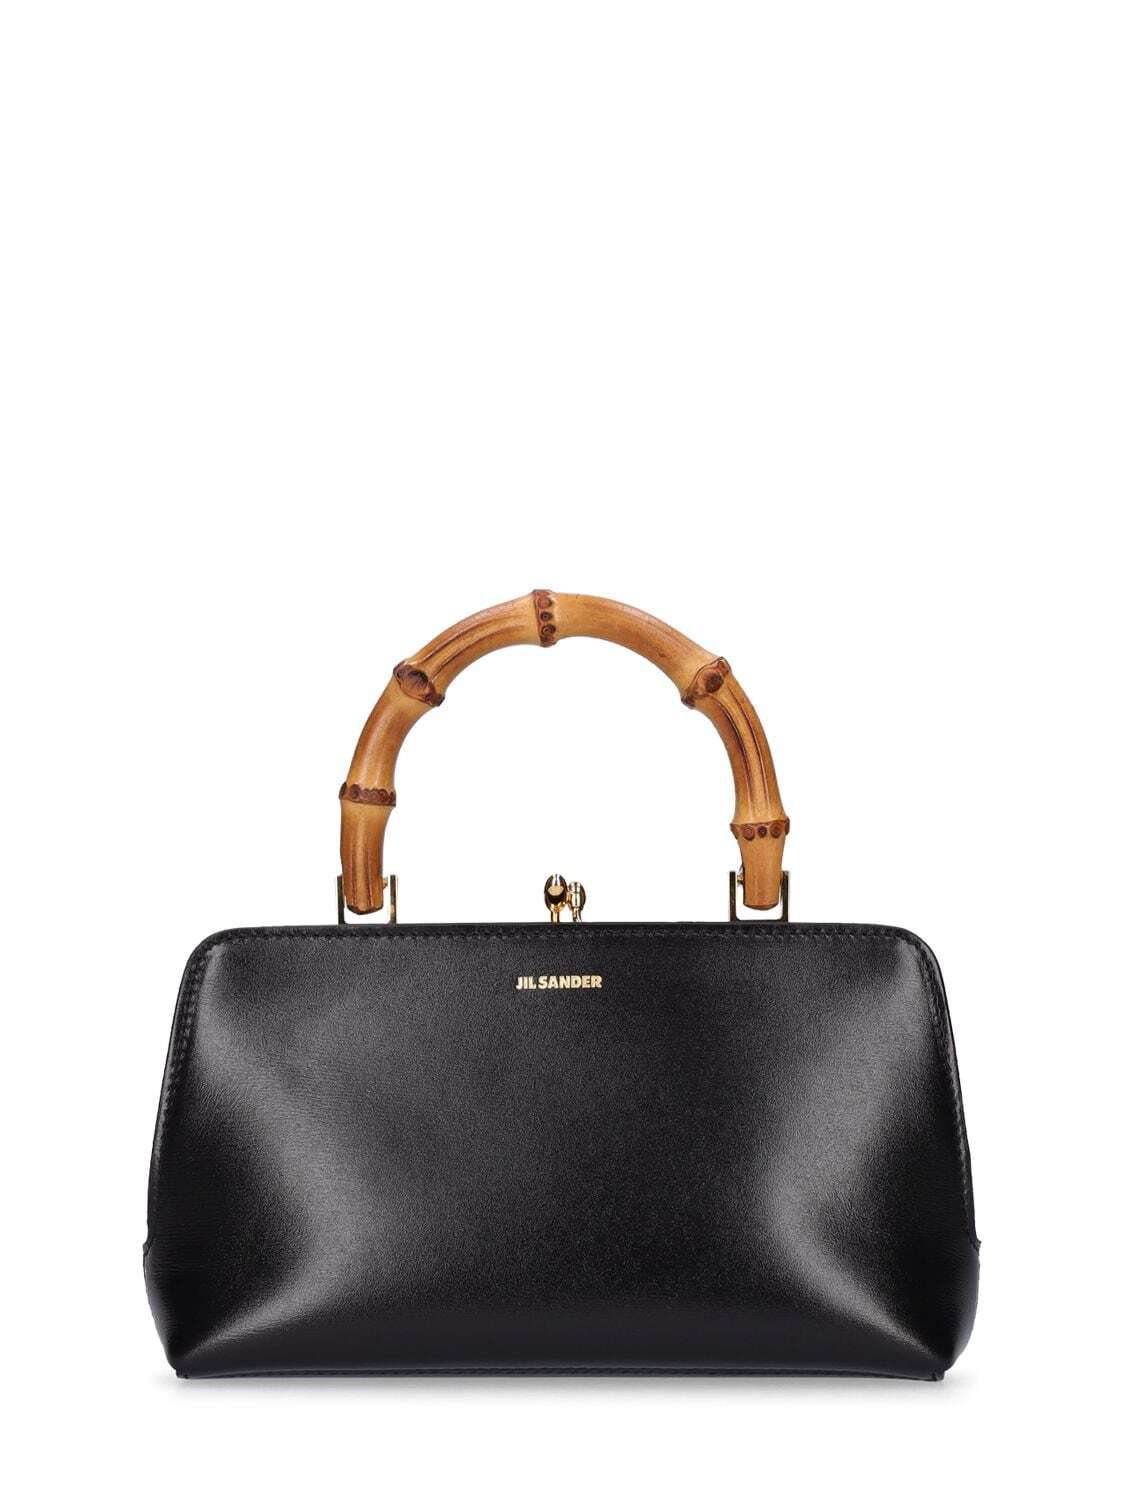 JIL SANDER Mini Goji Leather Top Handle Bag in black